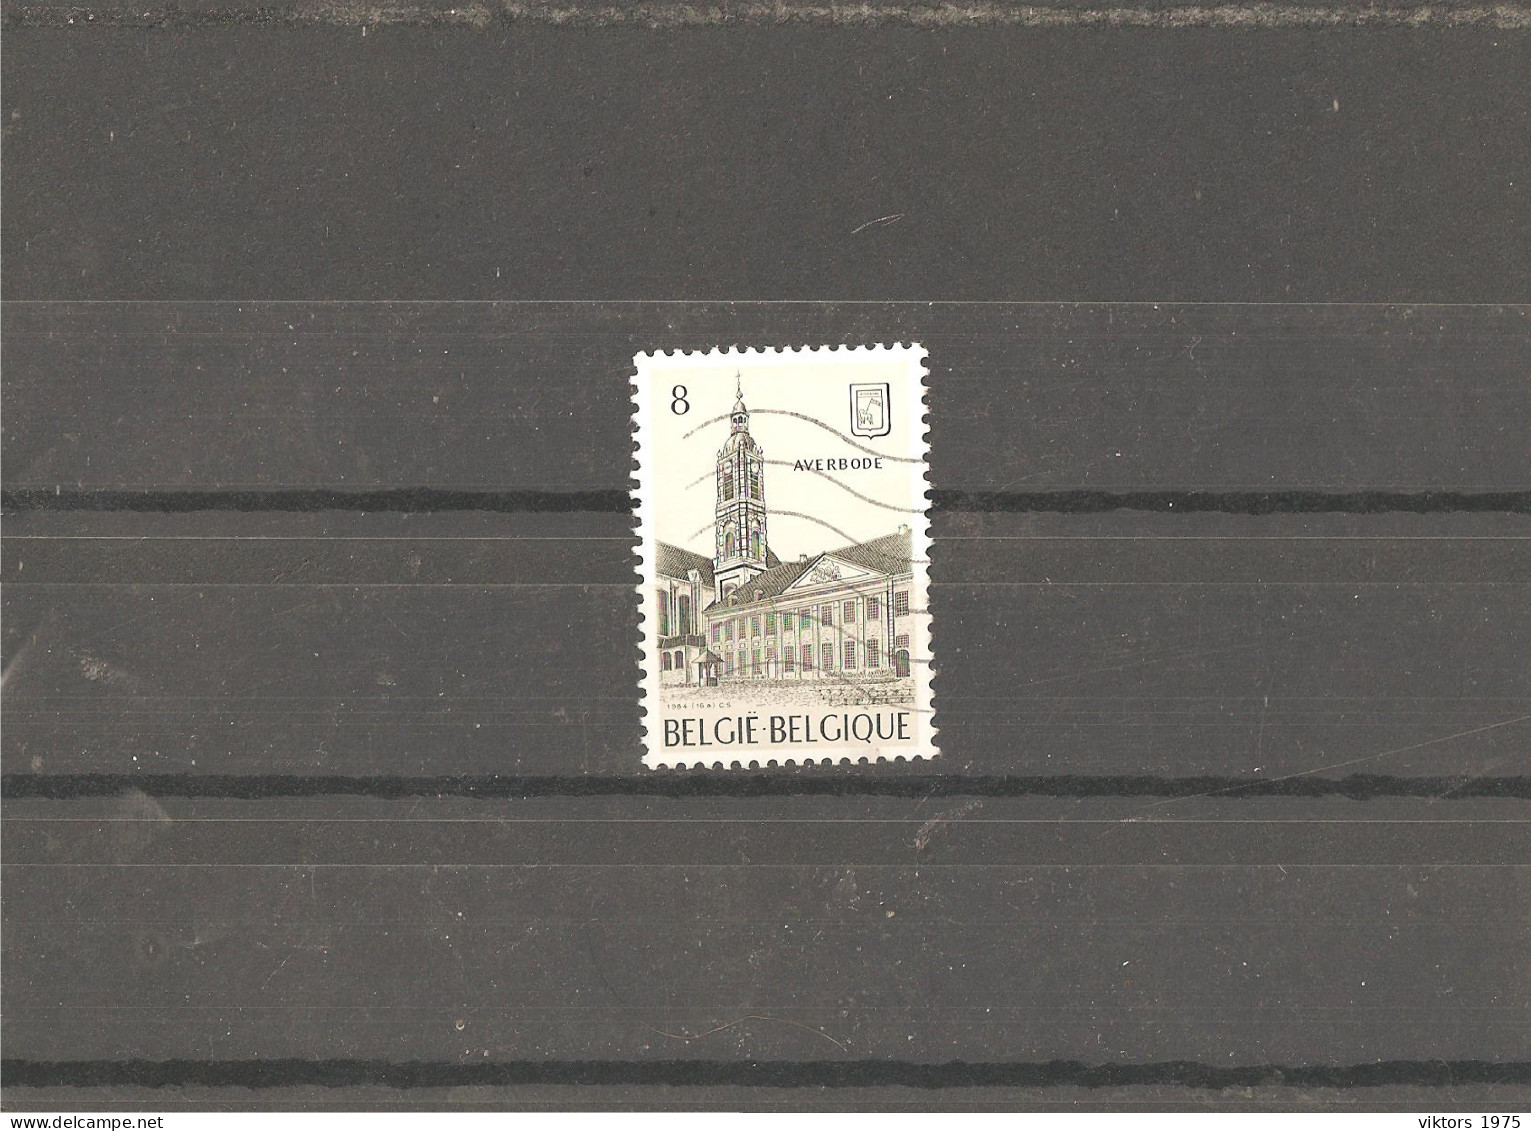 Used Stamp Nr.2198 In MICHEL Catalog - Oblitérés